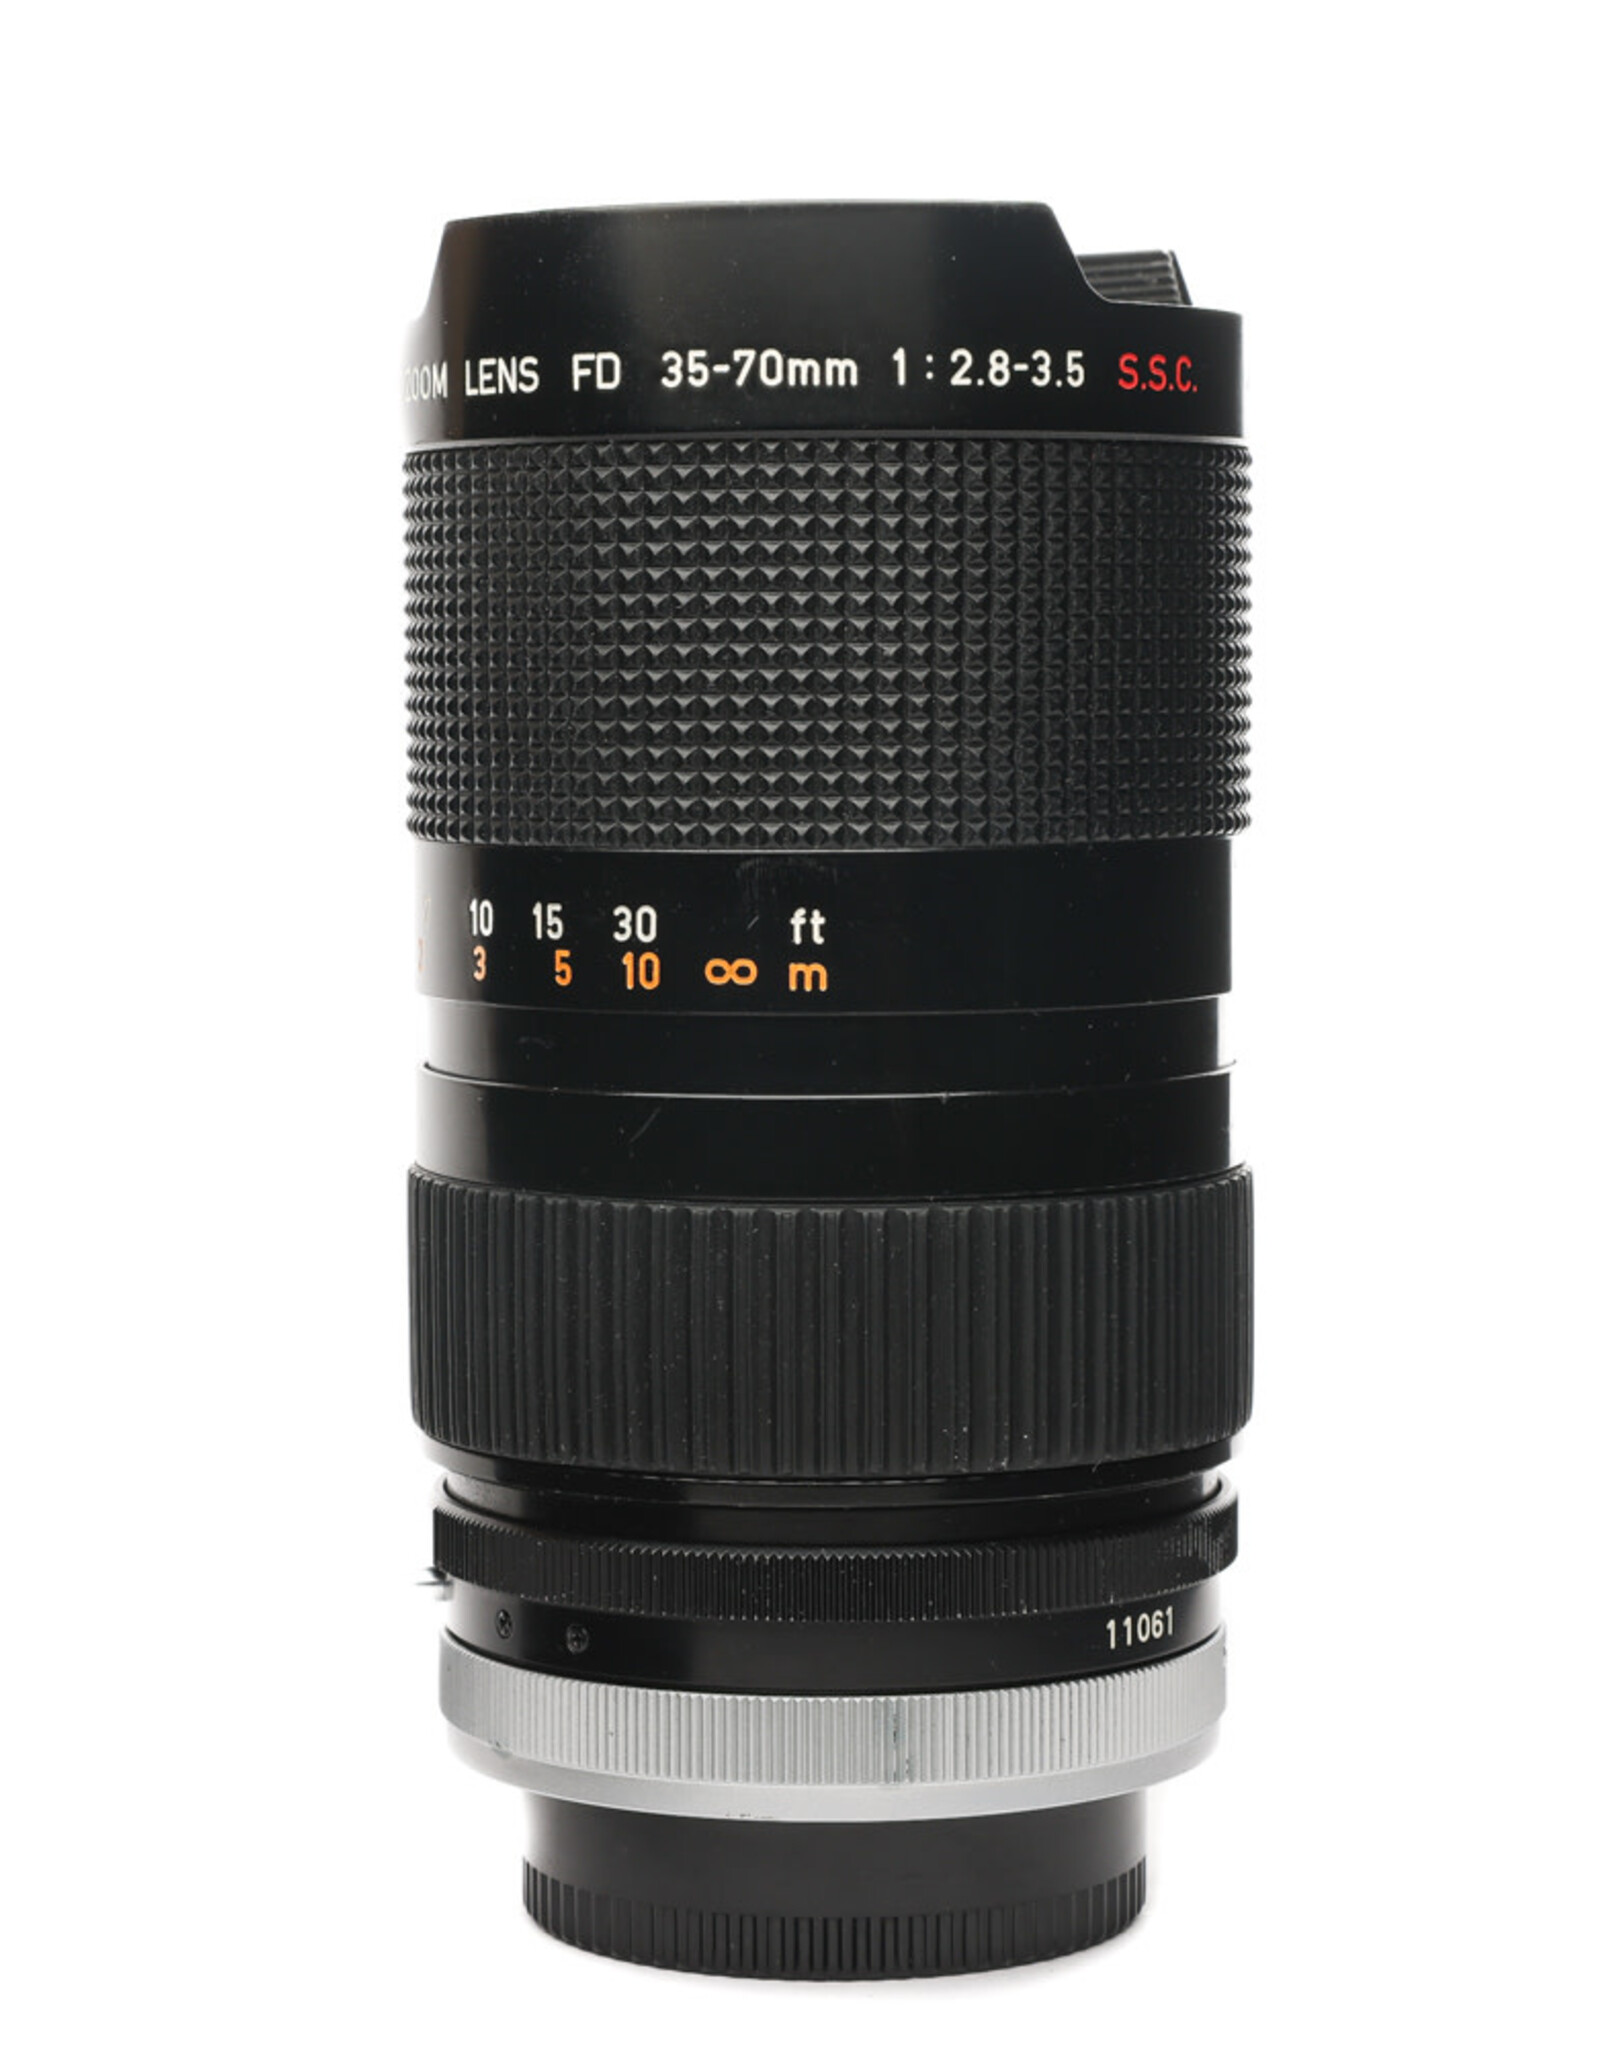 Canon Canon FD 35-70mm f2.8-3.5 SSC Lens